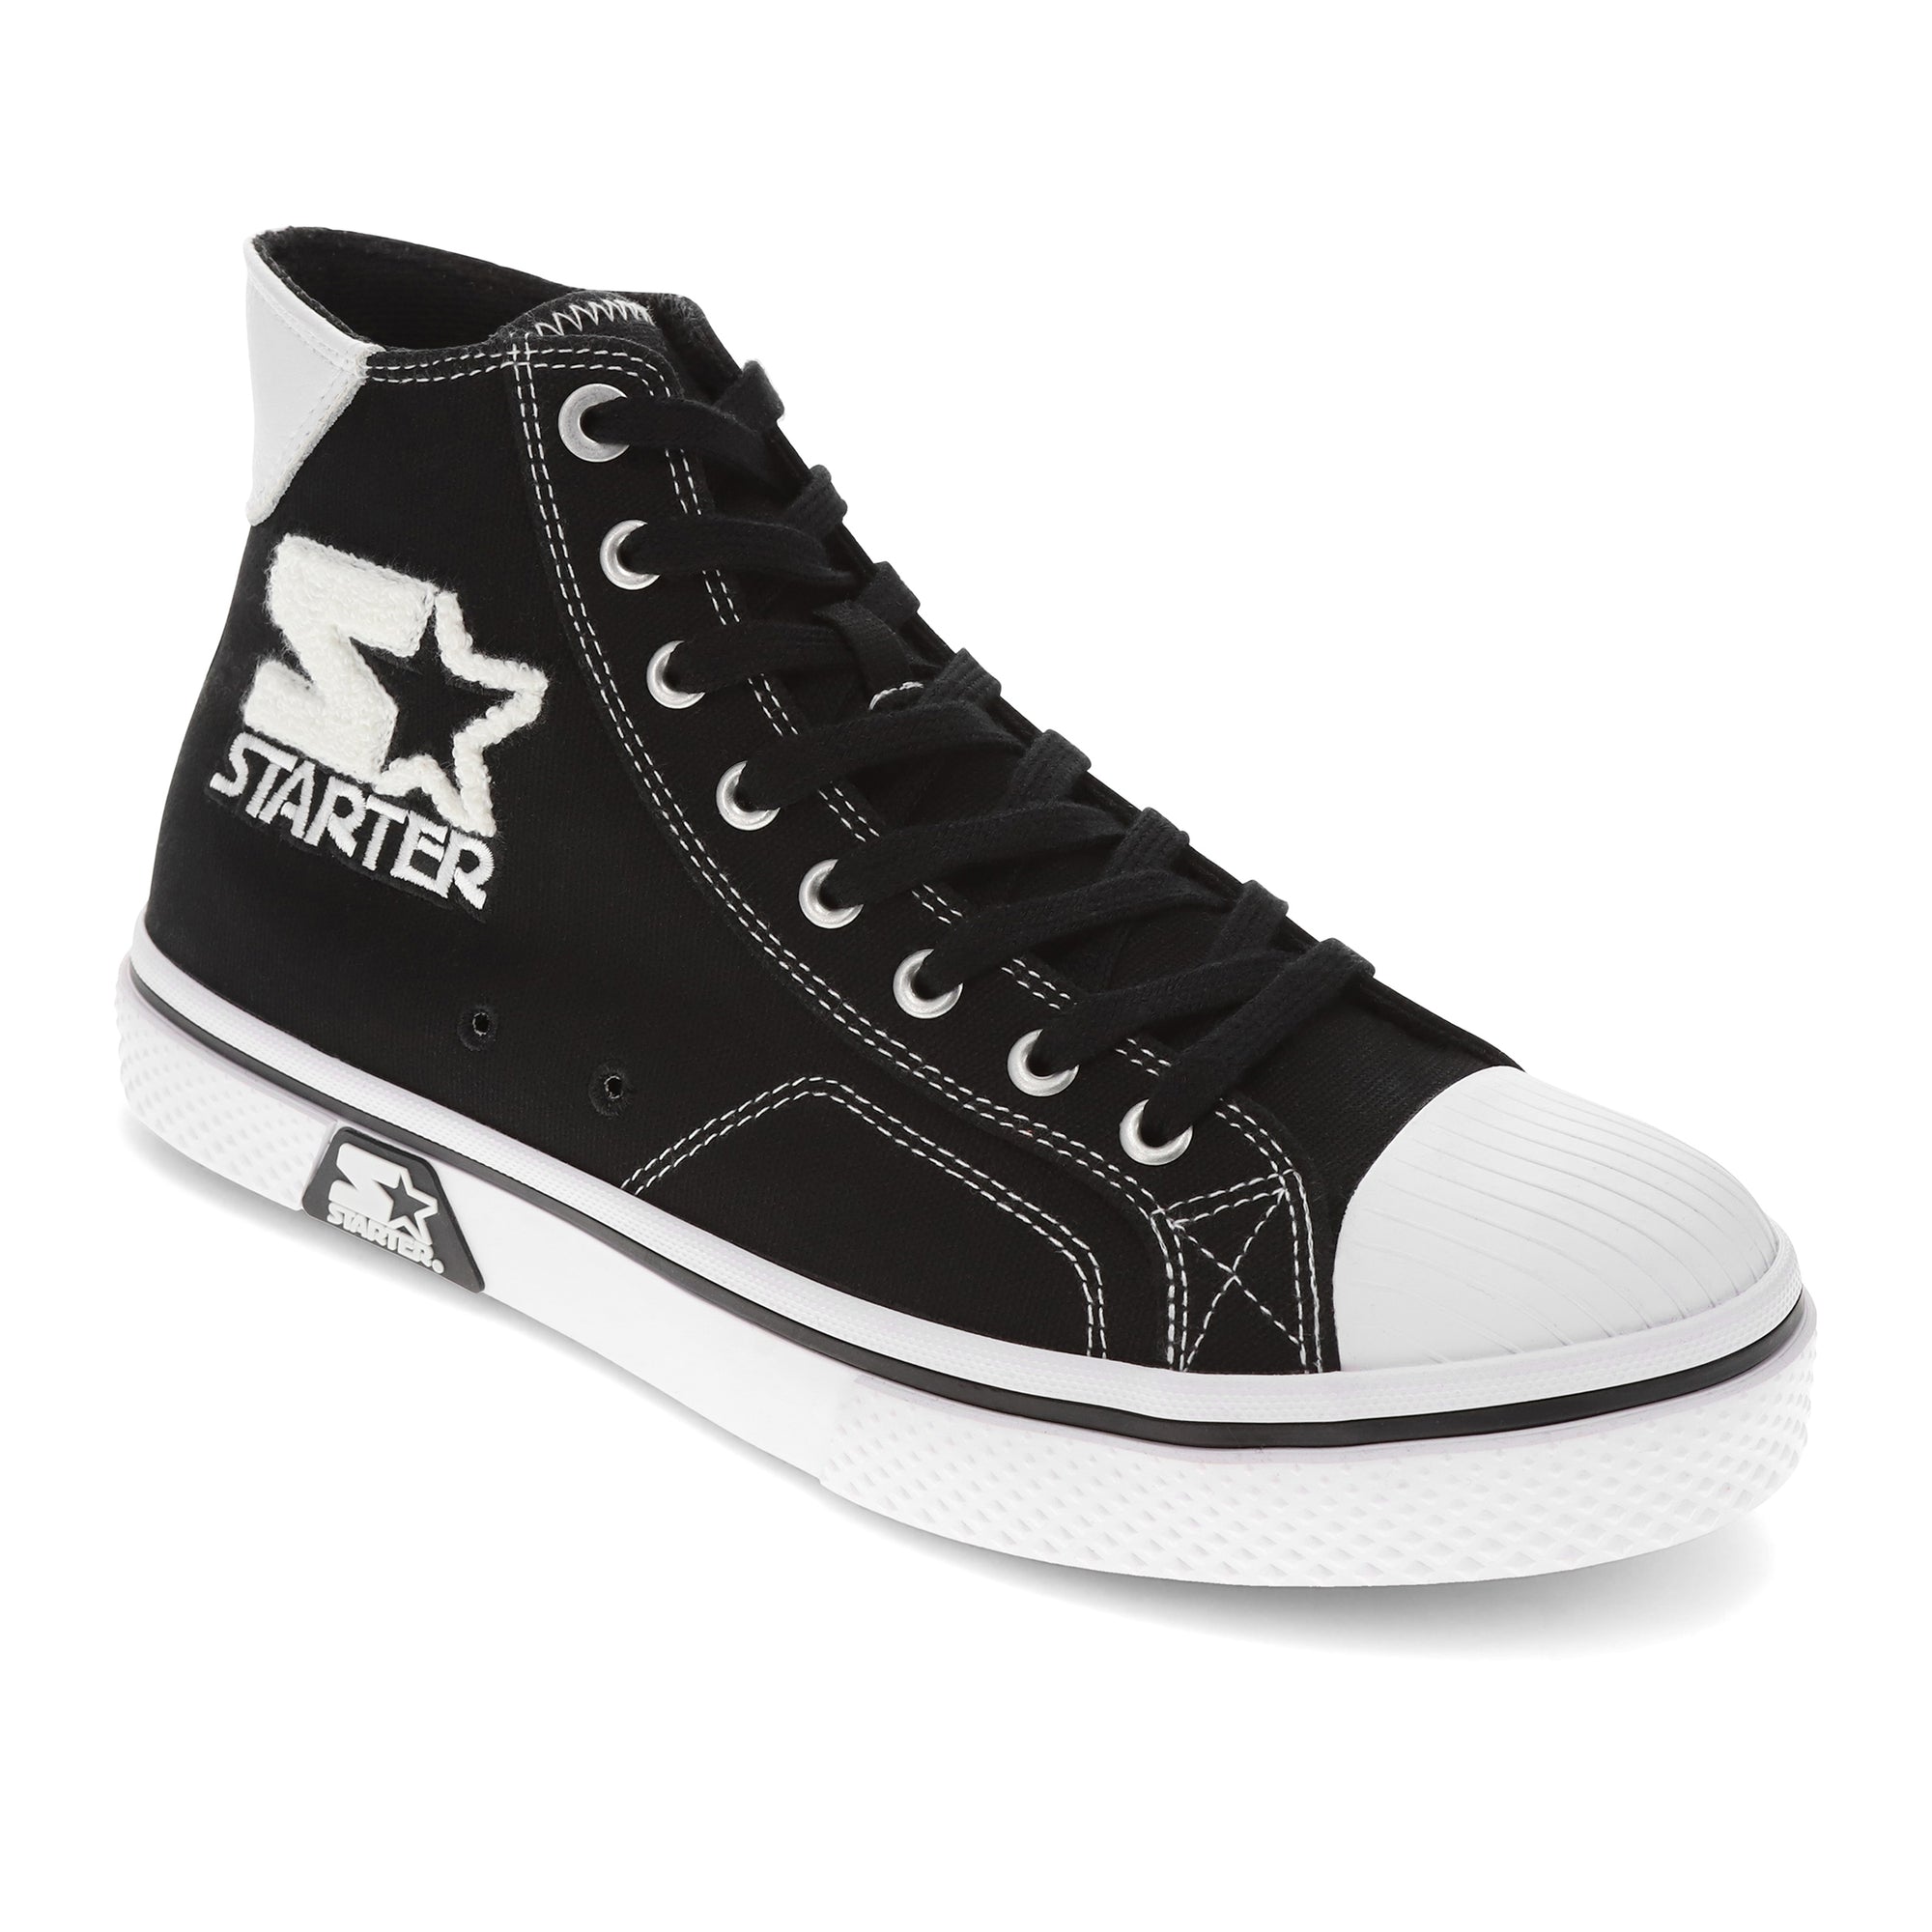 Black/White-Starter Mens Tradition 71 Hi Canvas Hightop Casual Sneaker Shoe